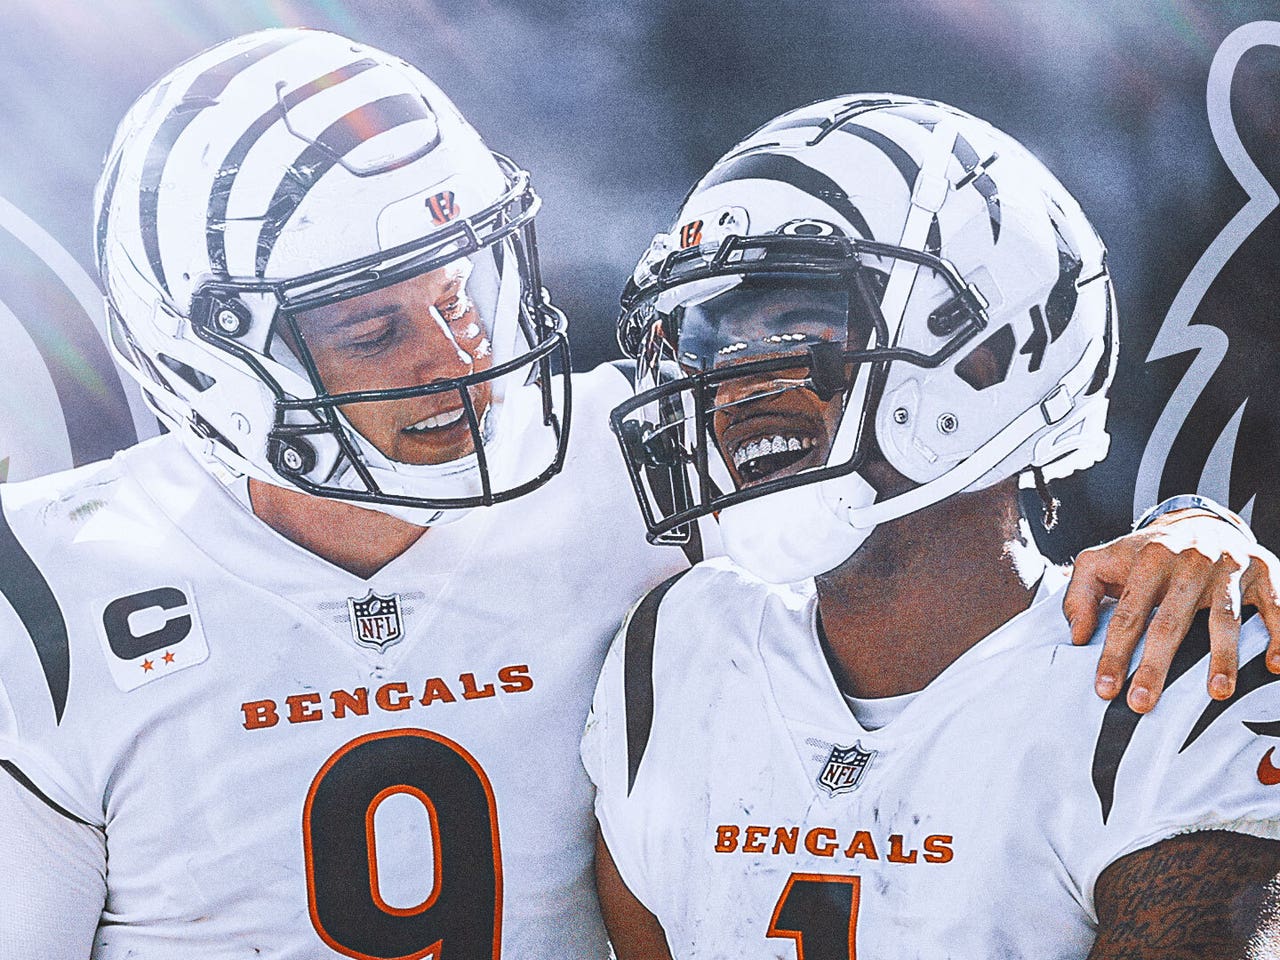 Cincinnati Bengals to wear 'White Bengal' uniforms for Monday